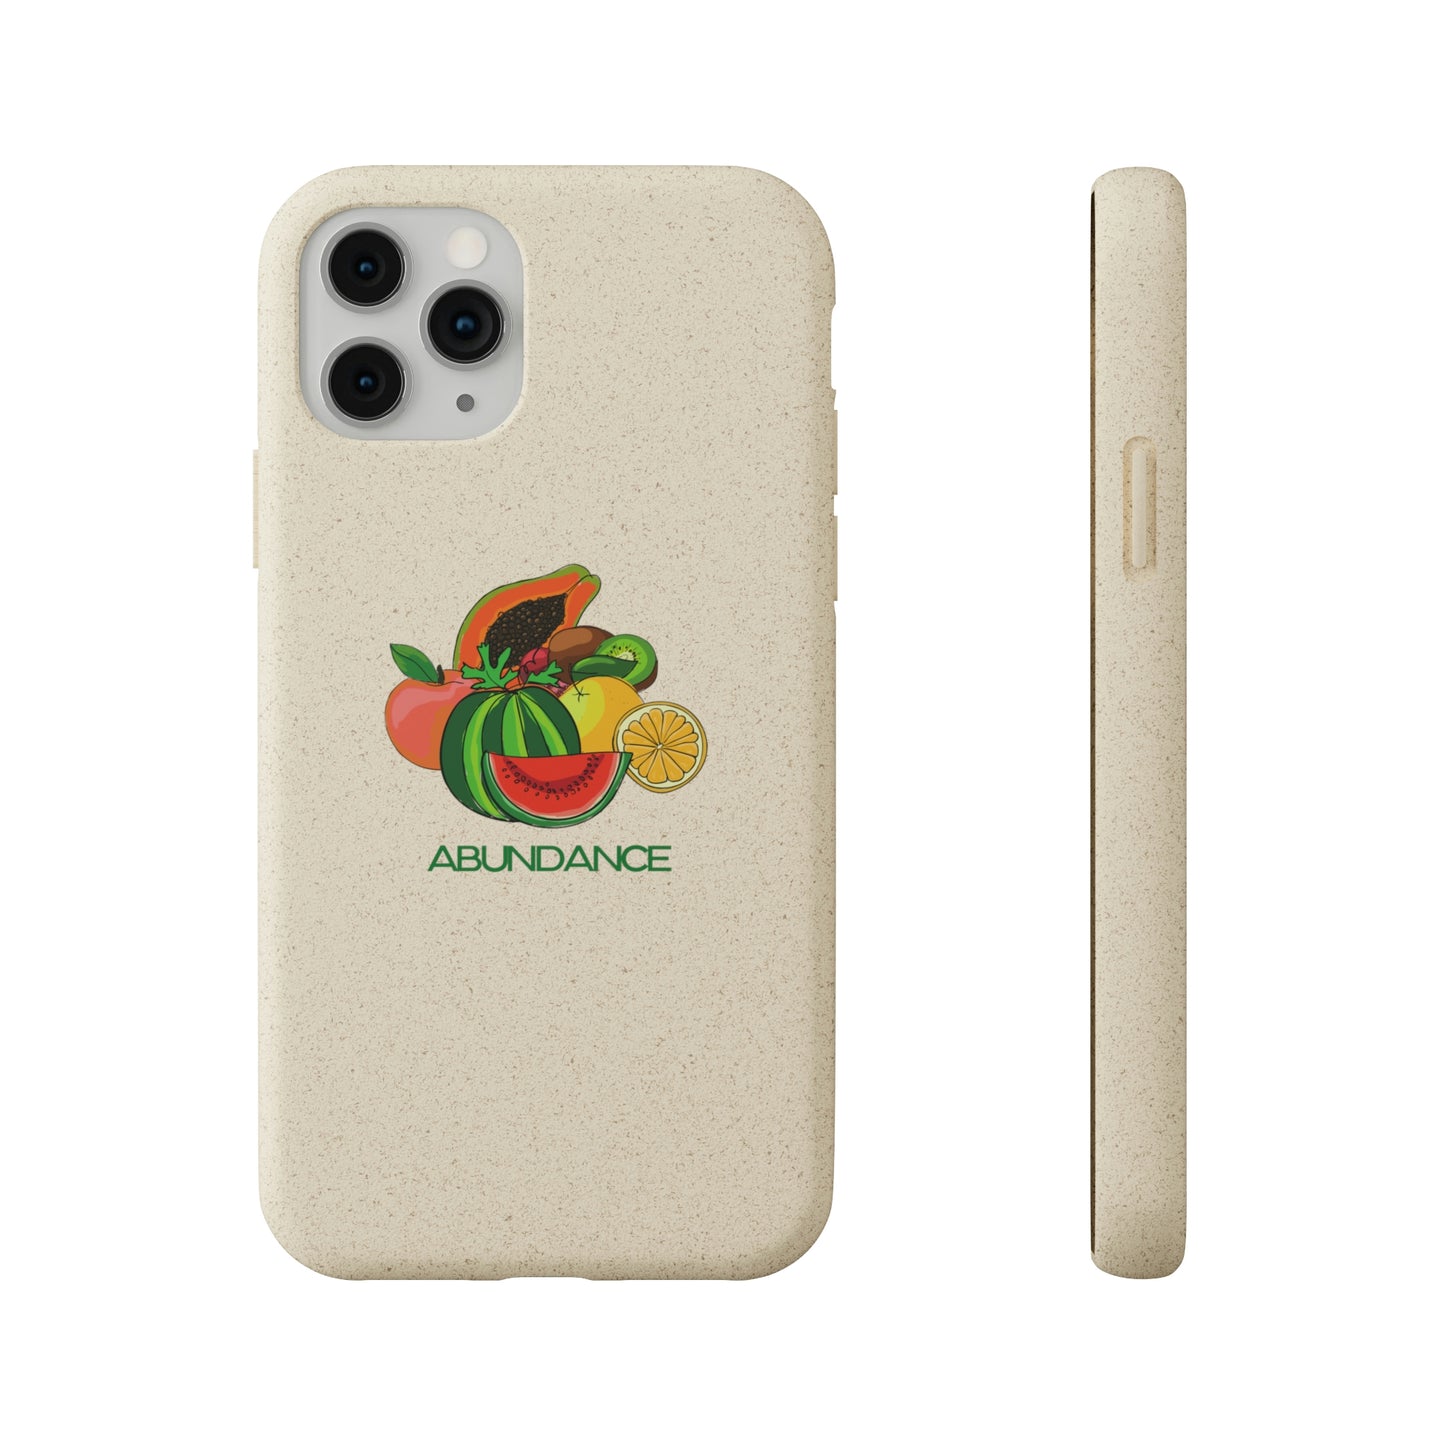 Biodegradable iPhone Cases - ABUNDANCE